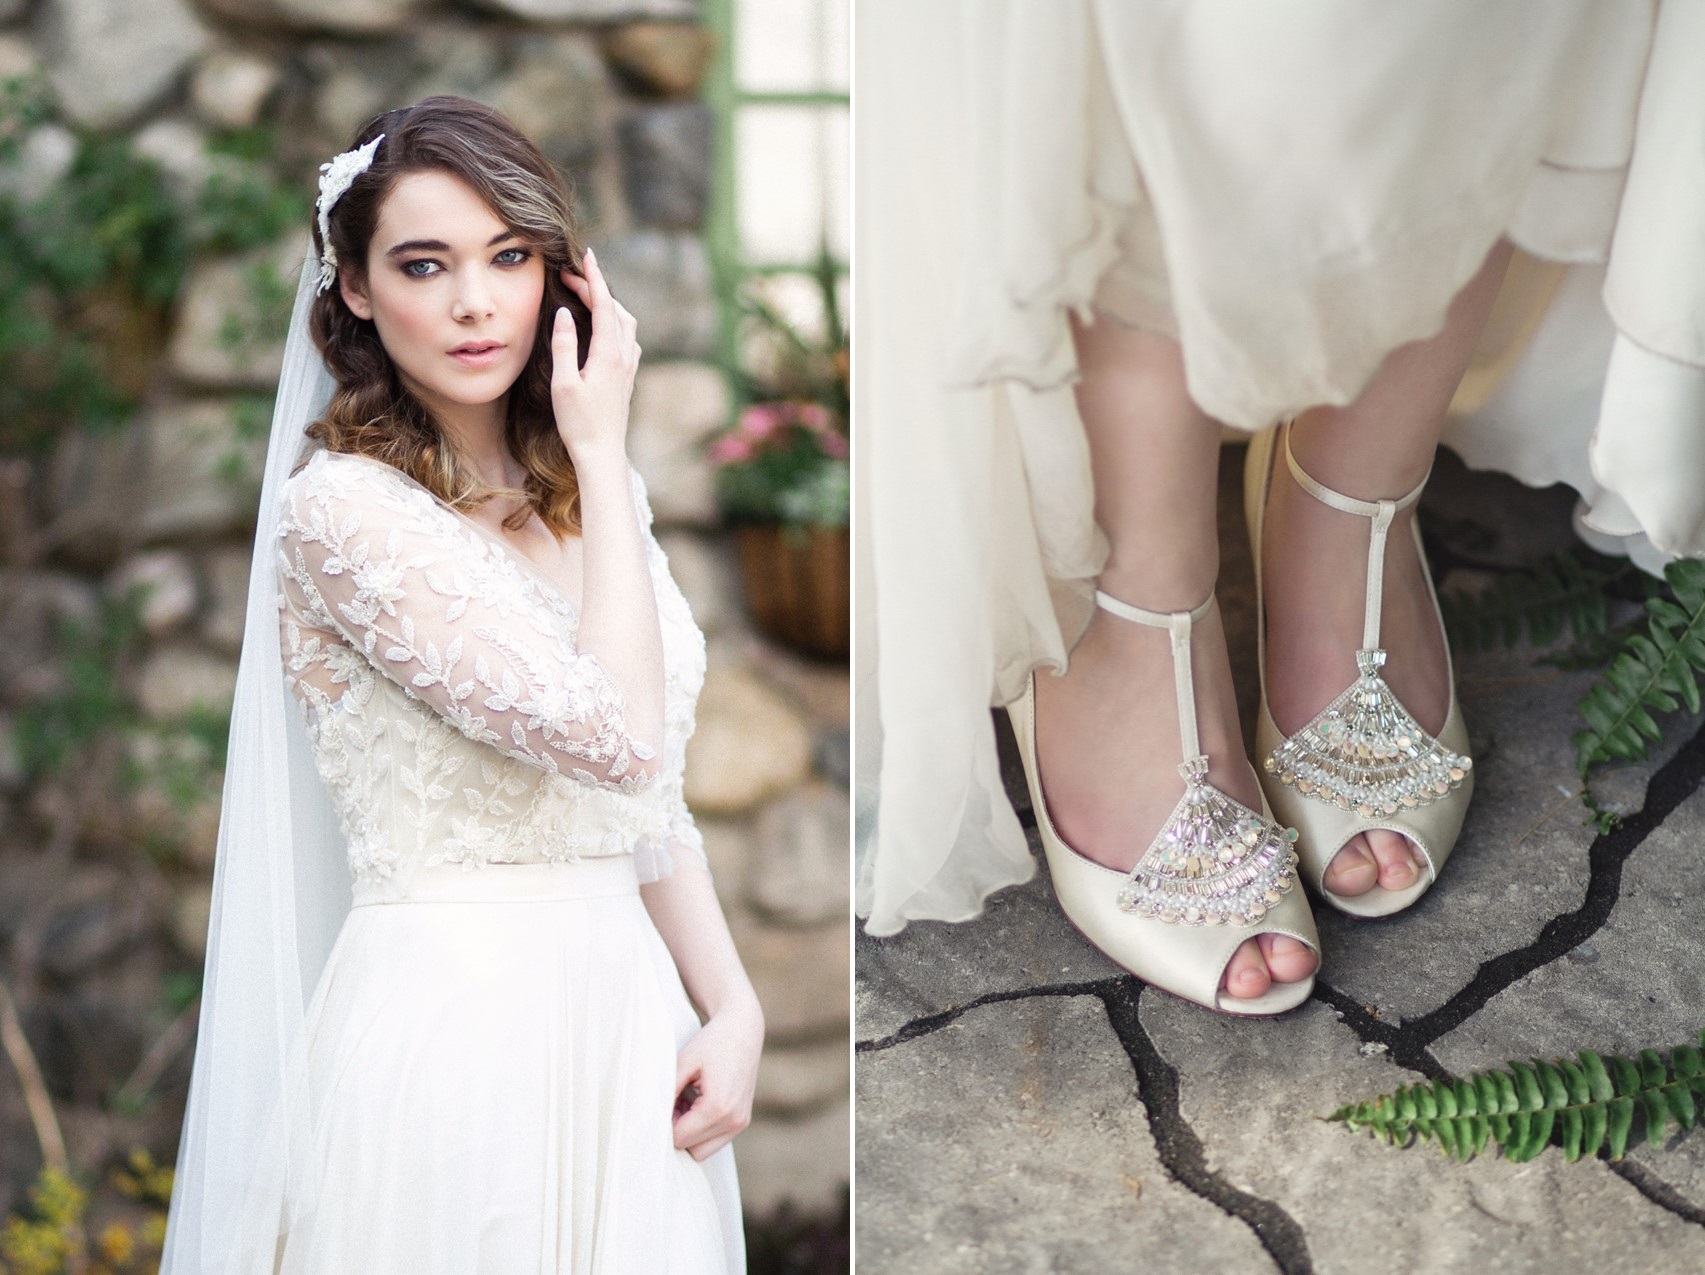 Bridal Veil & Bridal Shoes - Romantic Al Fresco Wedding Ideas Inspired by Tuscany